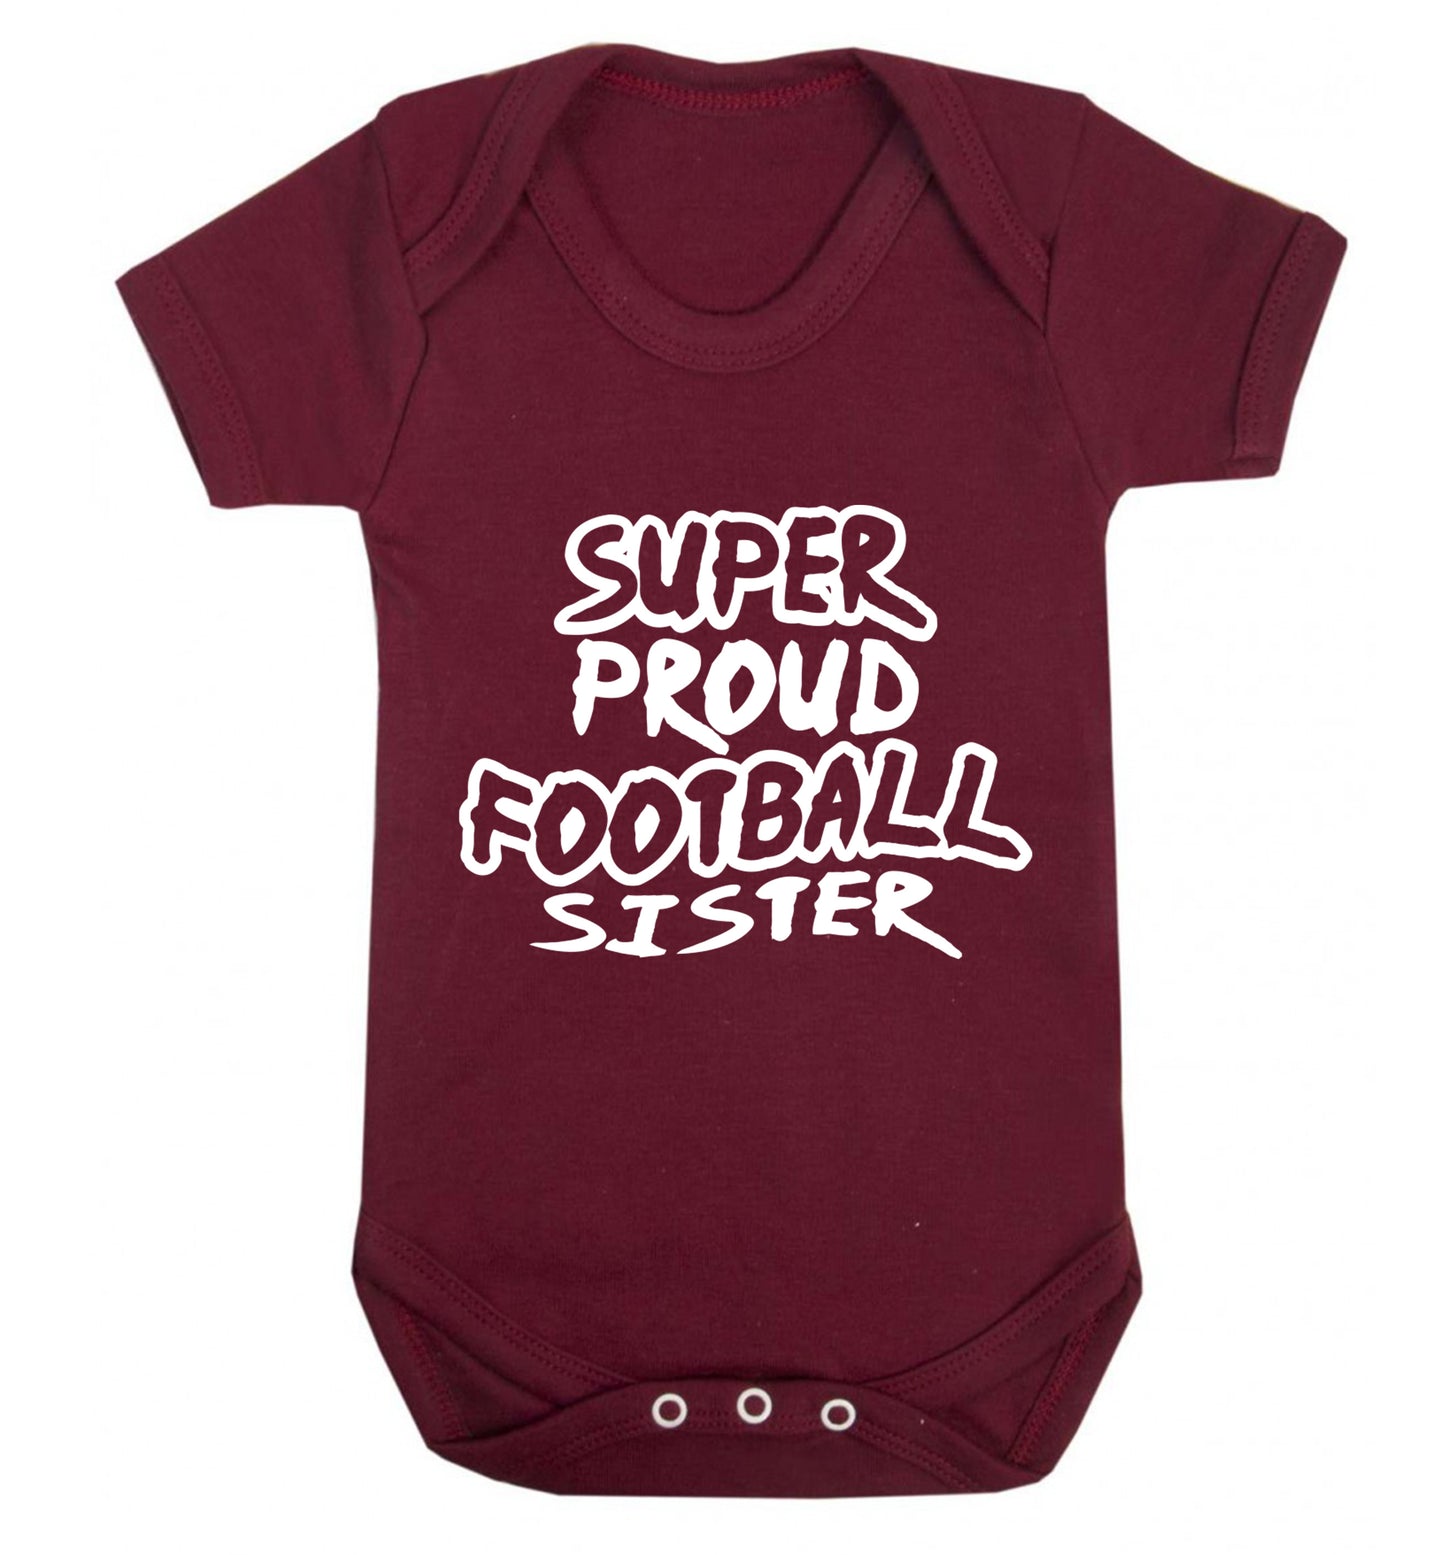 Super proud football sister Baby Vest maroon 18-24 months